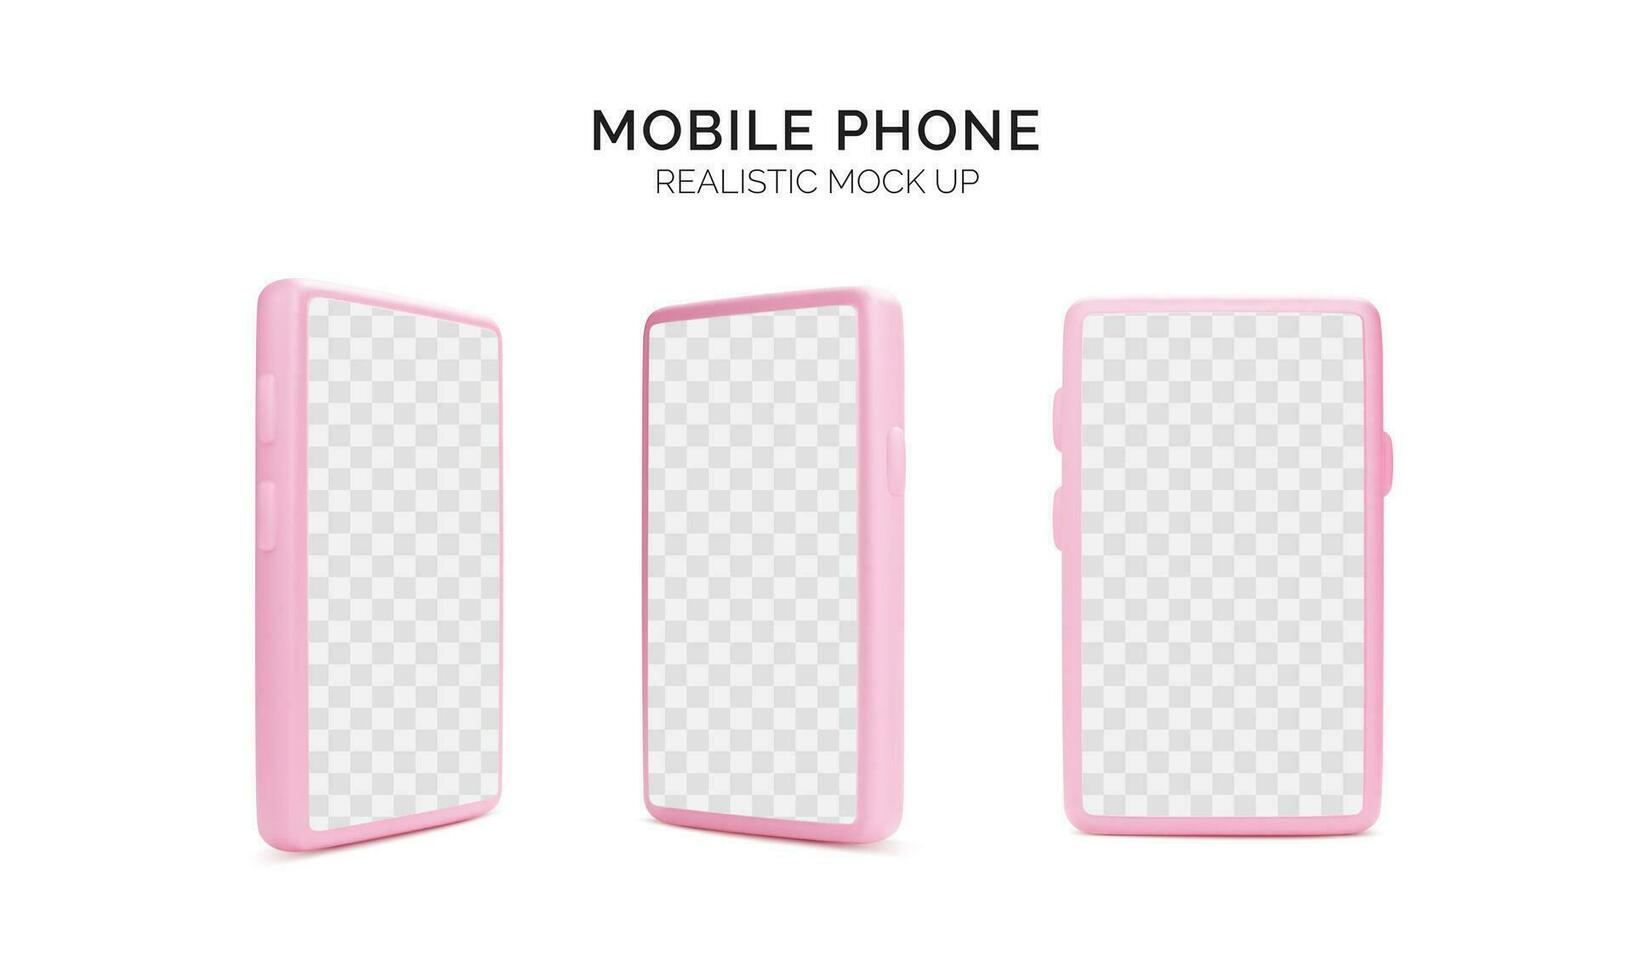 móvil teléfono realista burlarse de arriba. 3d hacer teléfono inteligente rosado teléfono modelo con vacío pantalla aislado en blanco antecedentes. vector ilustración